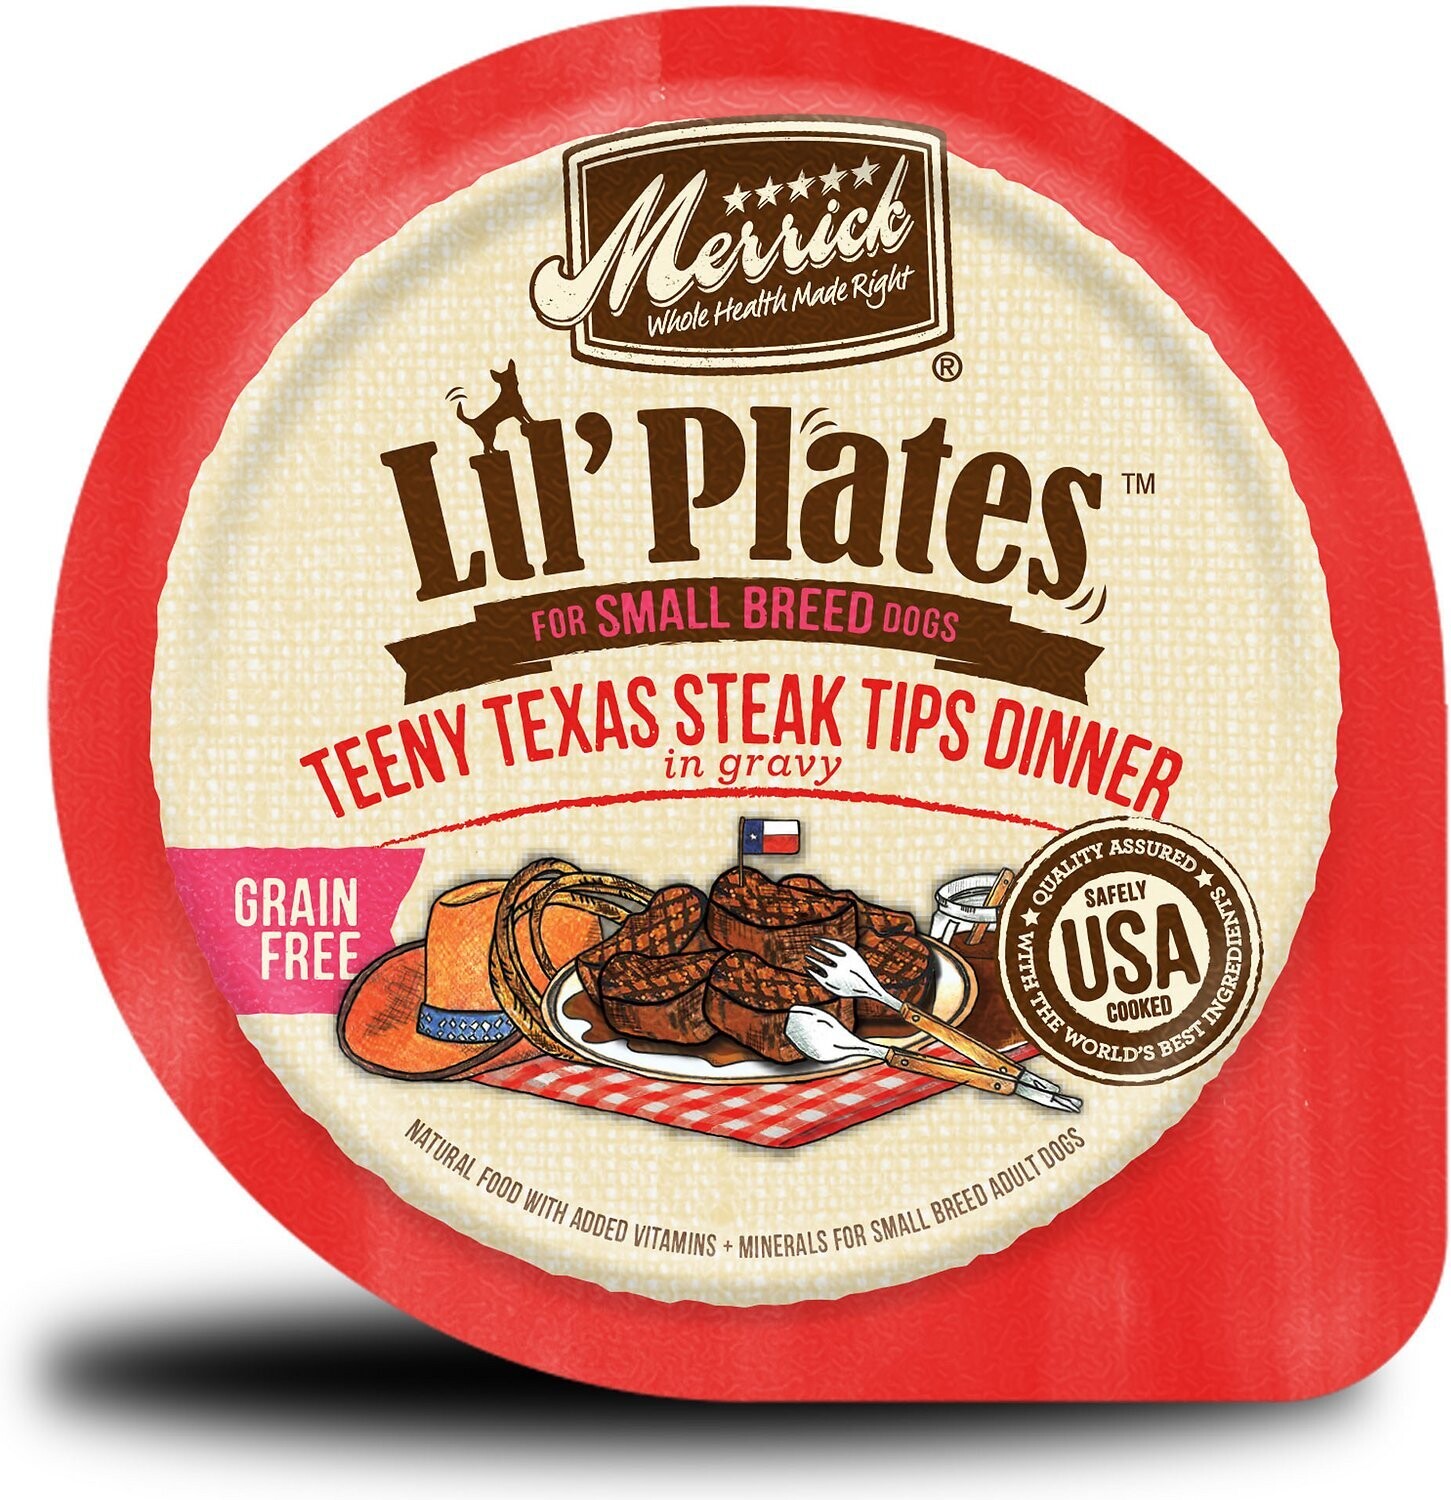 Merrick Lil' Plates Teeny Texas Steak Tips cup 3.5oz 12/case